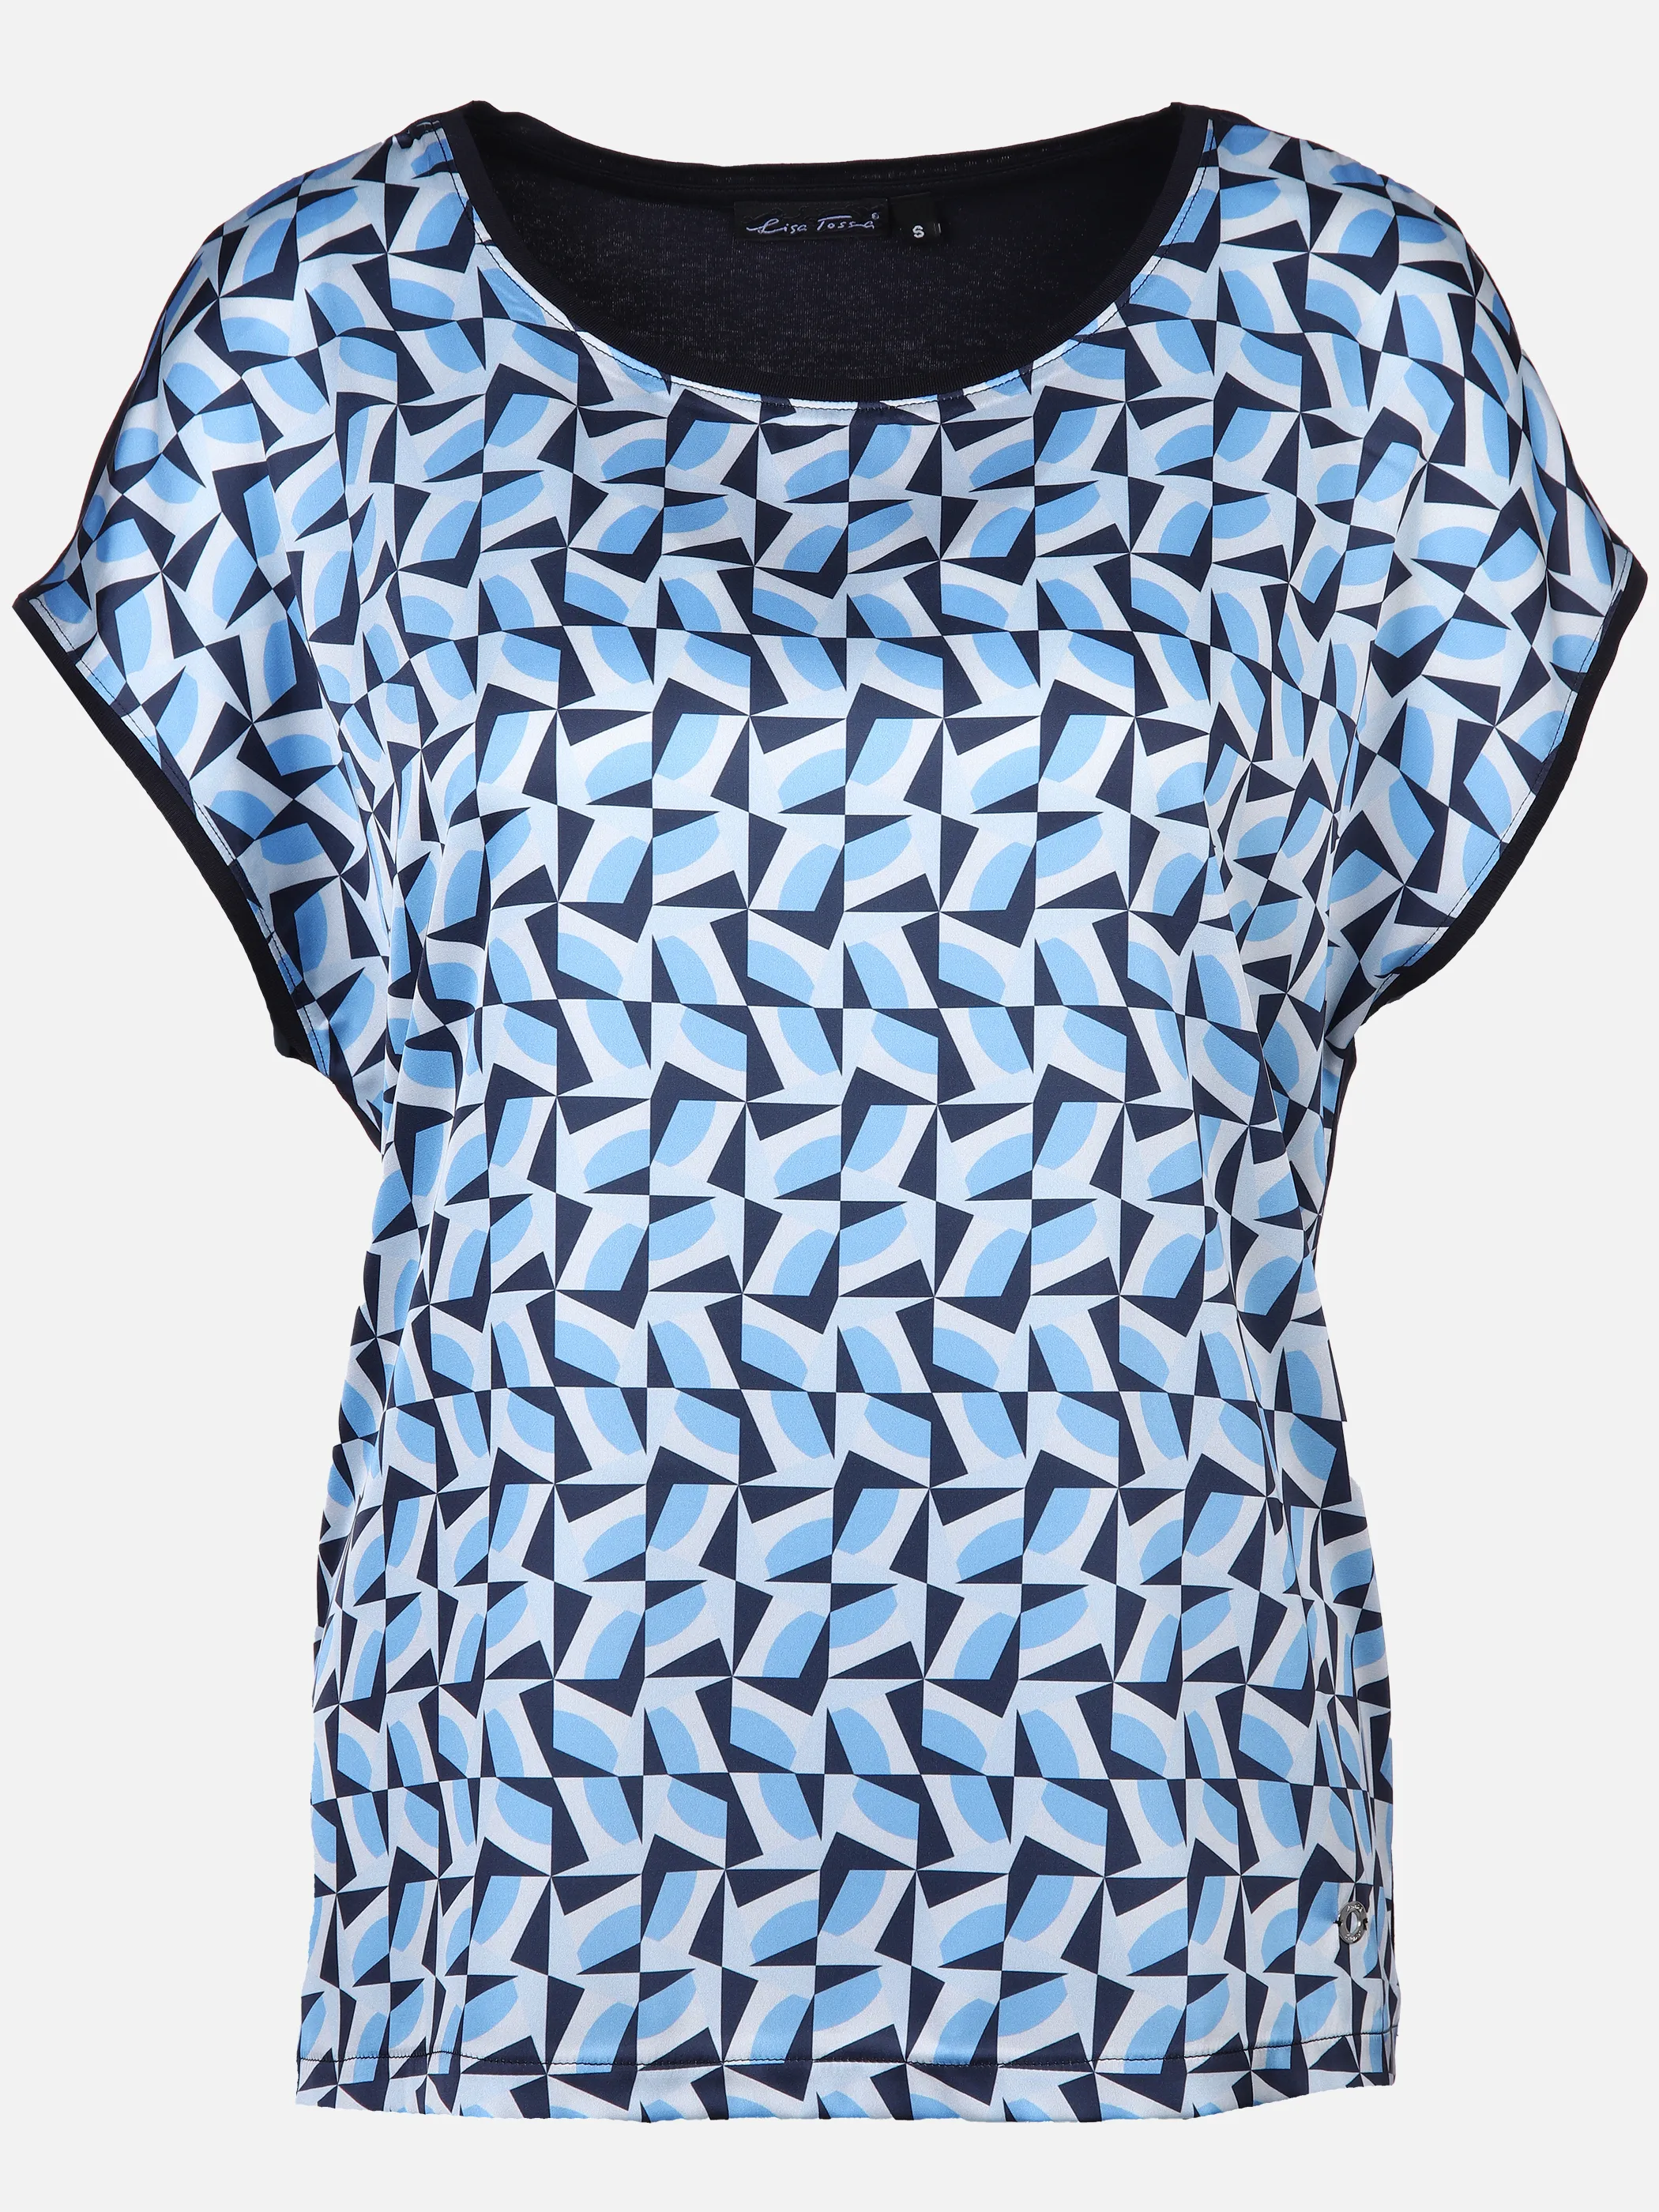 Lisa Tossa Da-Materialmix-Print-Shirt Blau 893334 BLAUMARINE 1